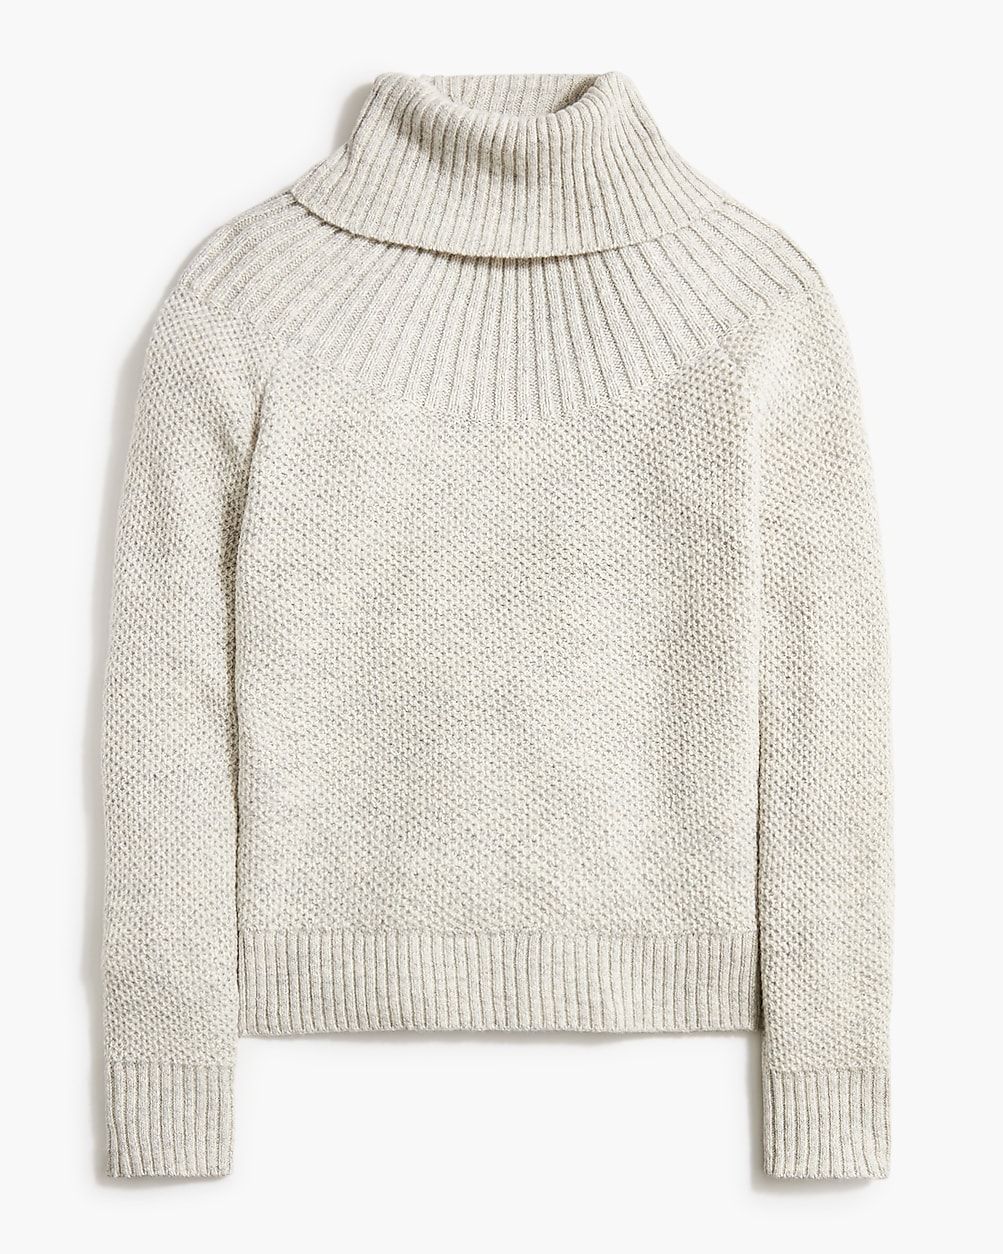 Mixed-stitch turtleneck sweater | J.Crew Factory